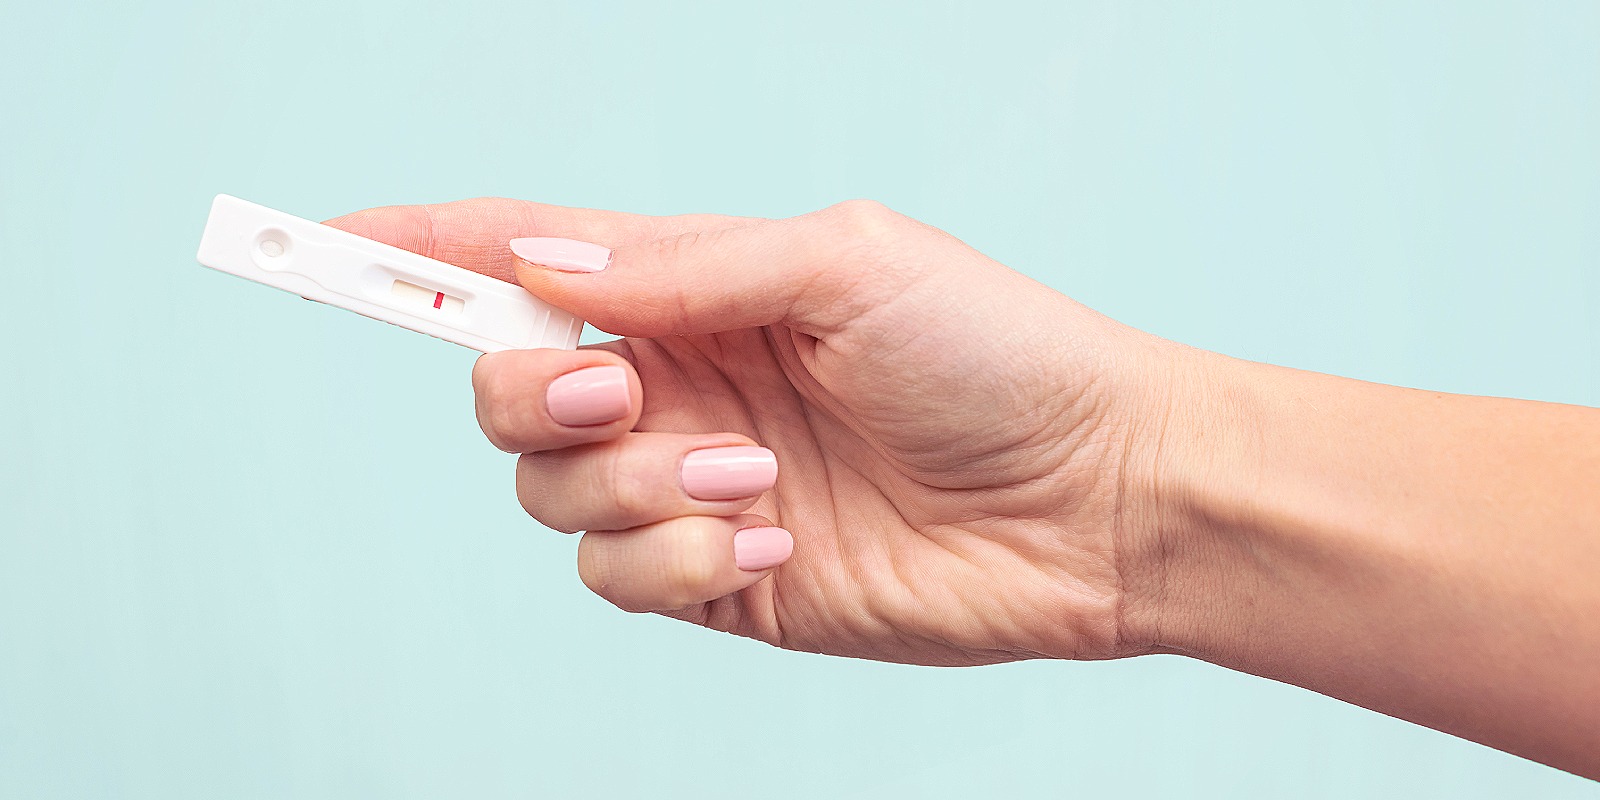 Picture of negative pregnancy test. Nexplanon implant provides effective contraception